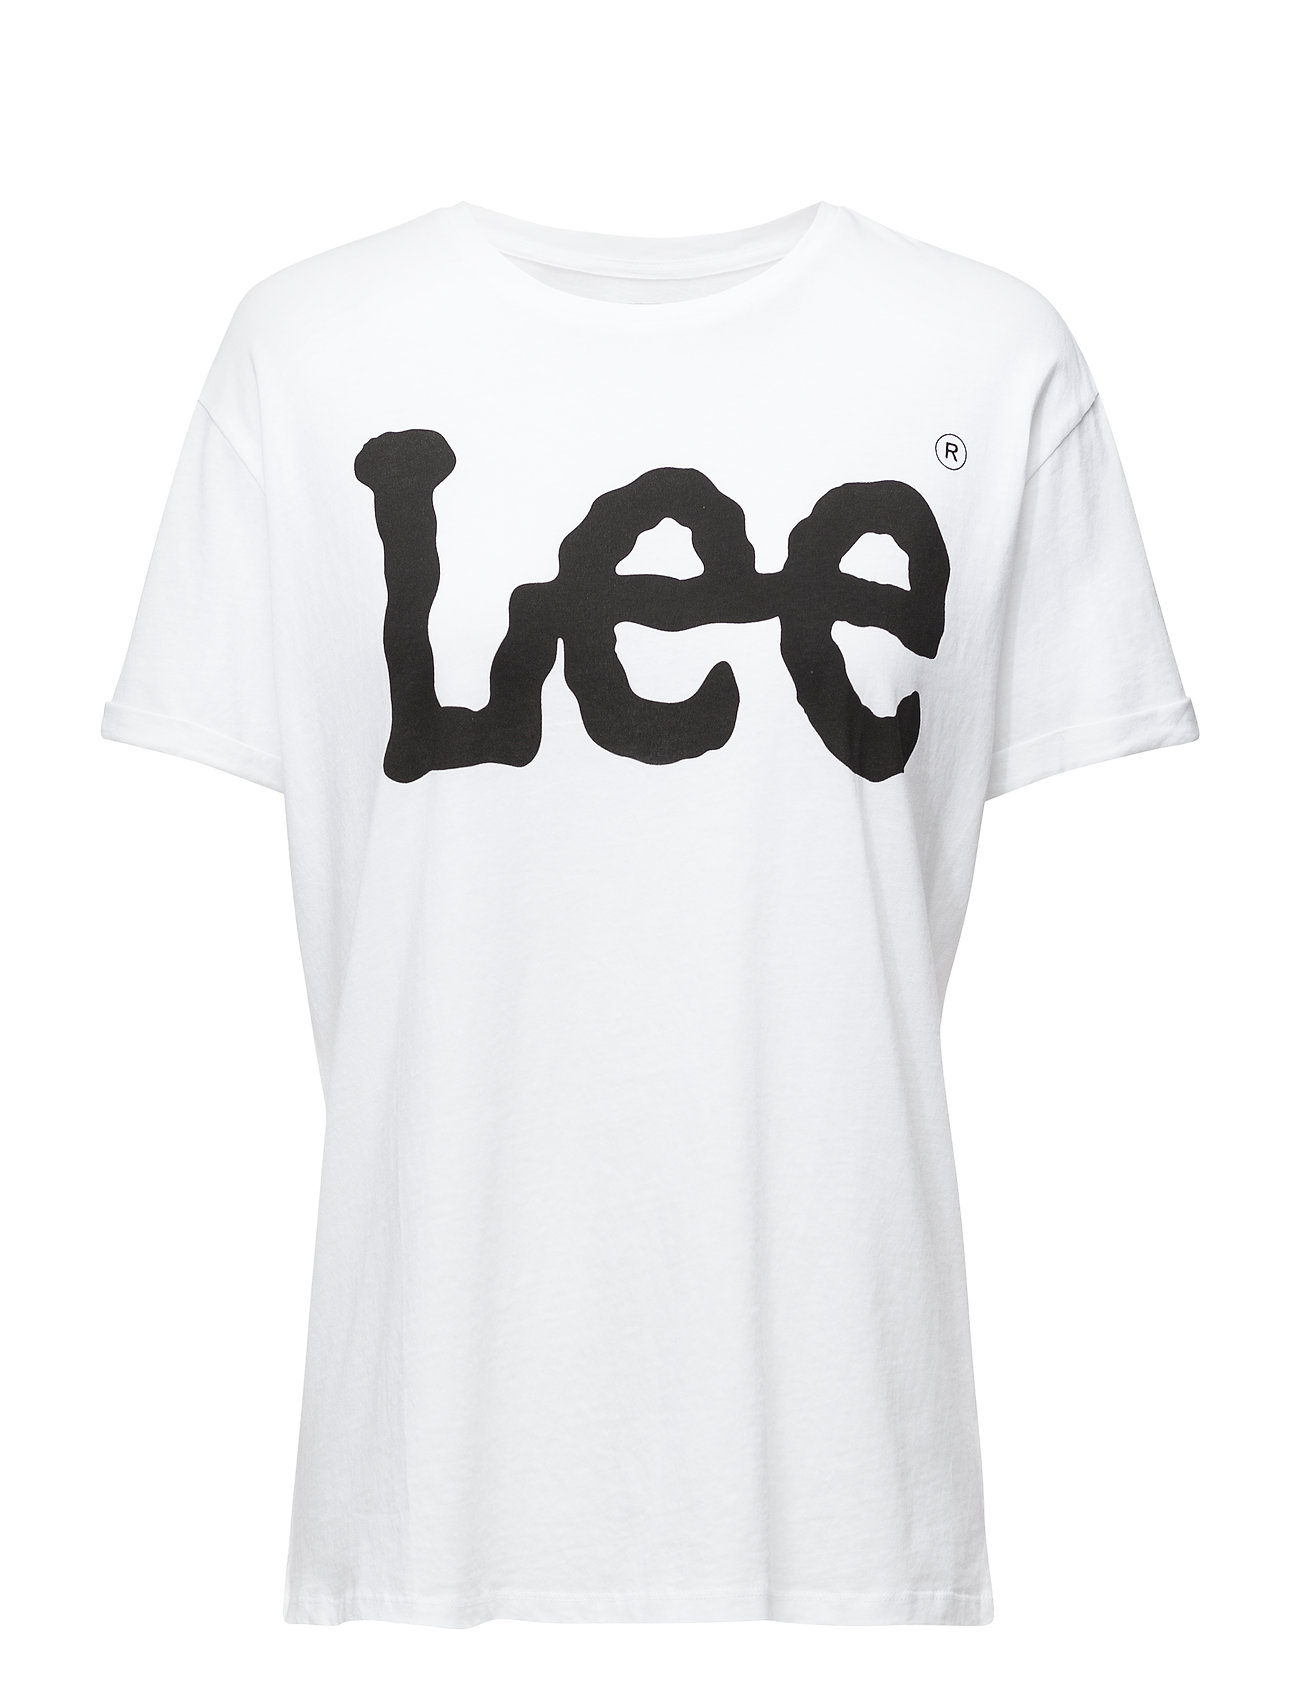 Lee Jeans Logo Tee - T-shirts - Boozt.com